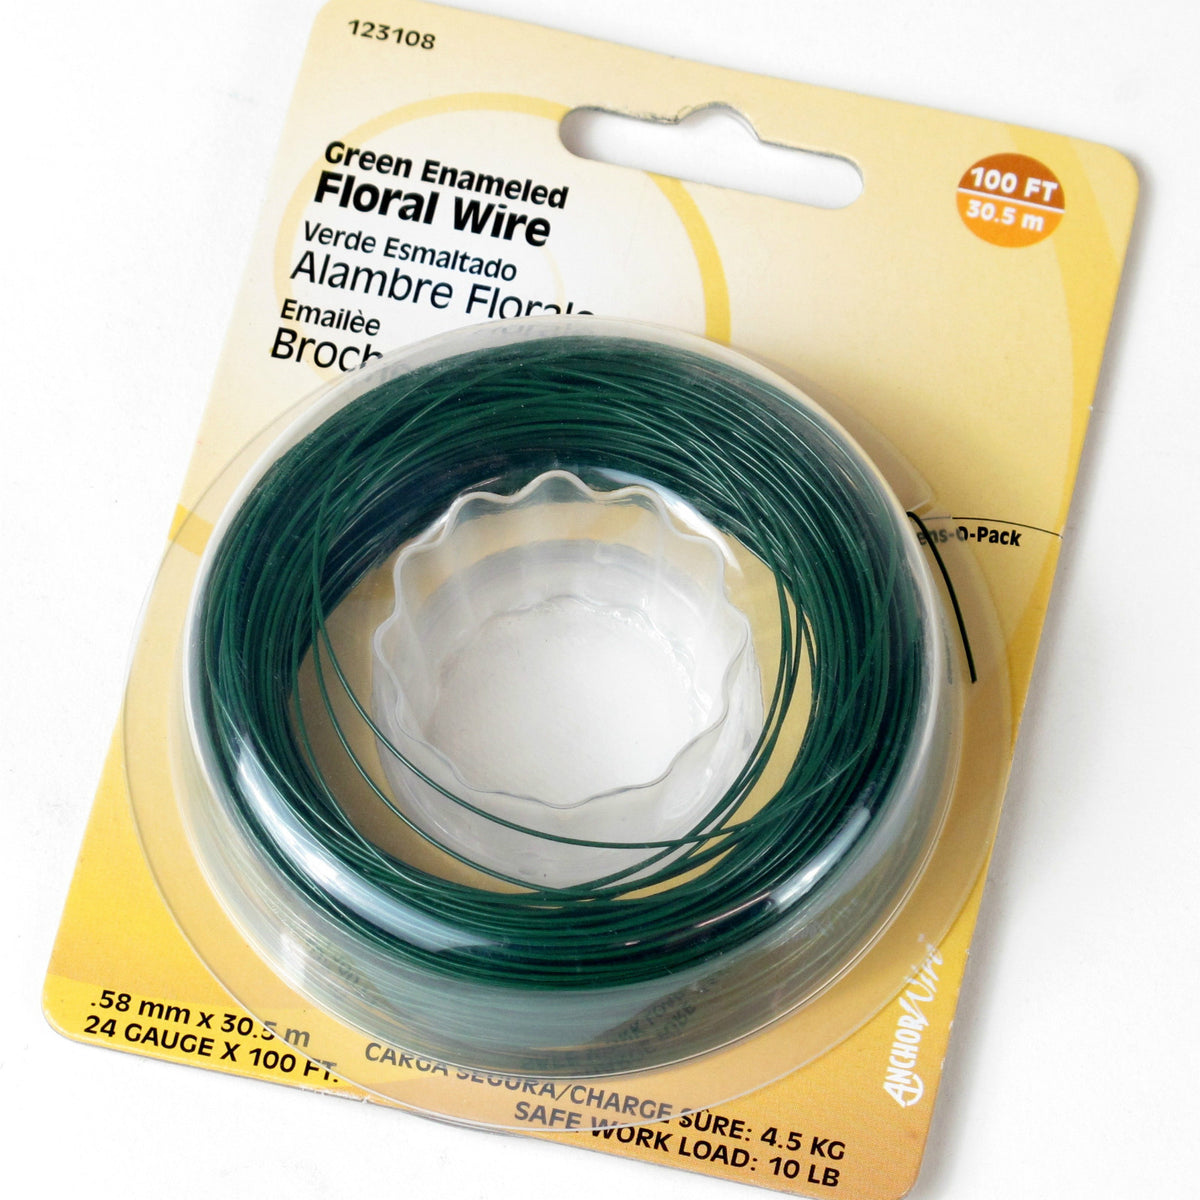 Hillman Fasteners 123108 Green Enameled Floral Wire, 24-Gauge, 100